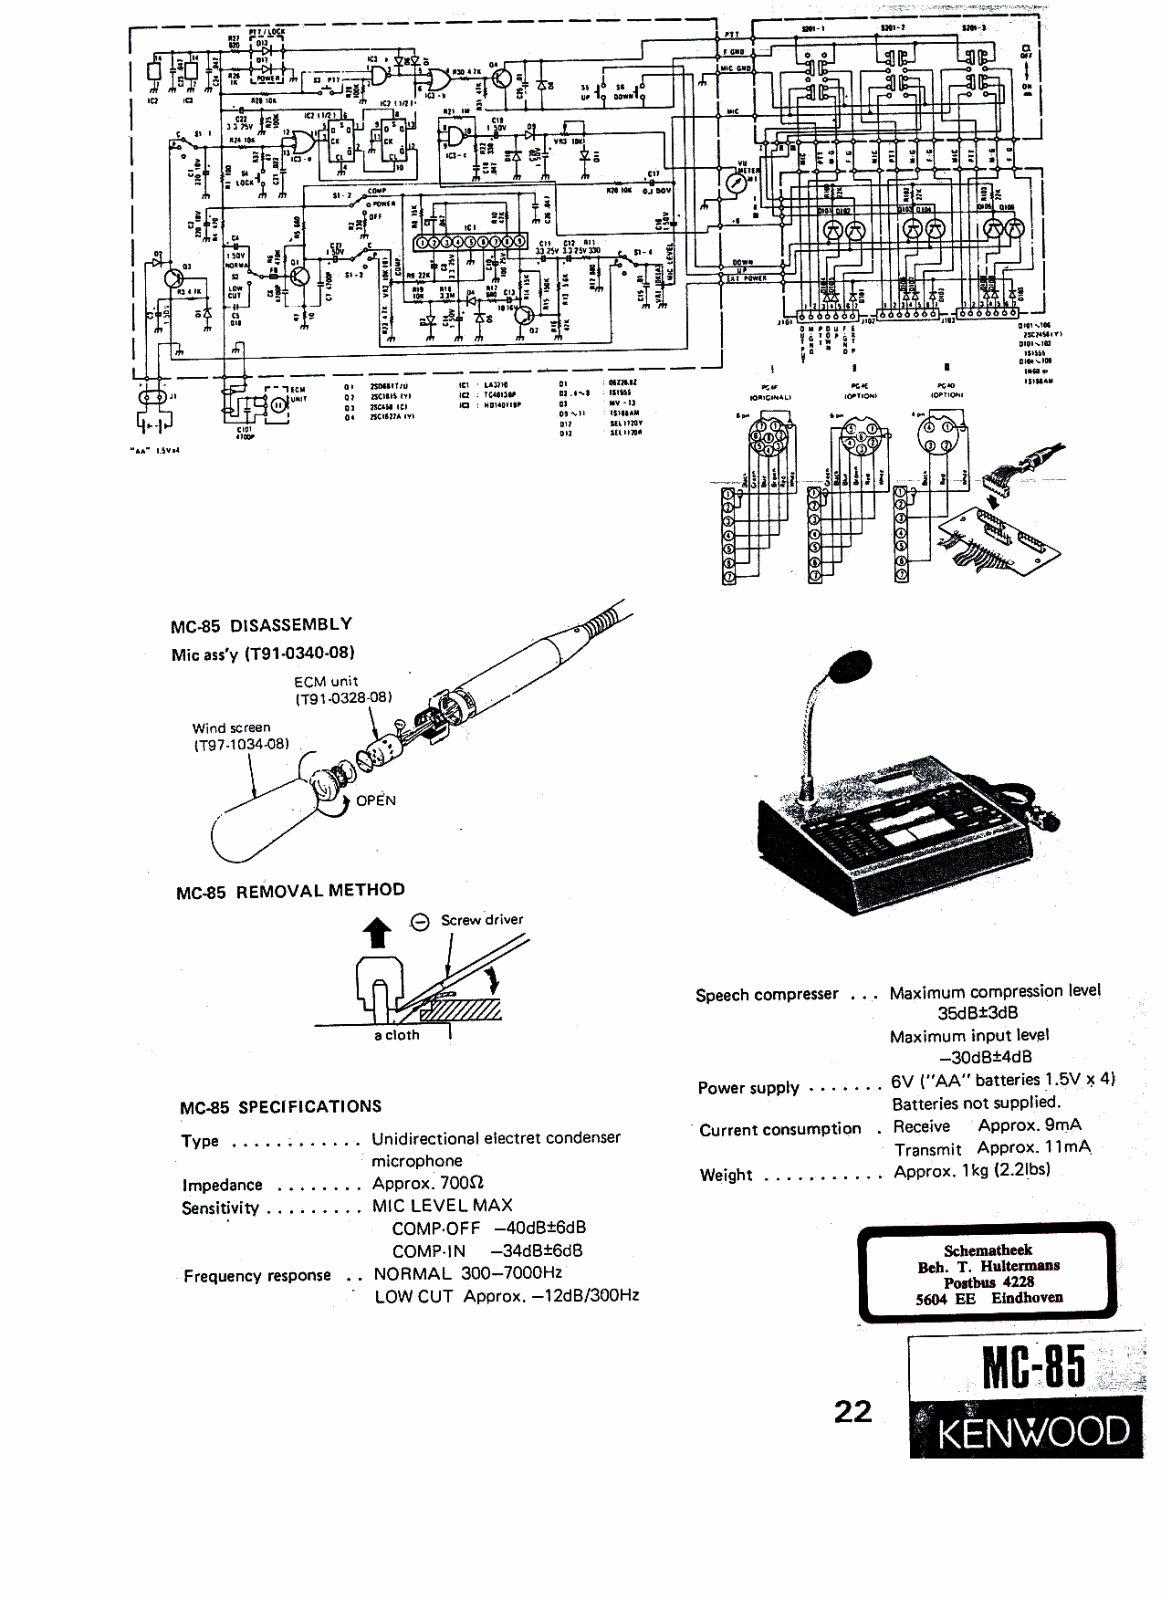 Kenwood MC-85 Service Manual